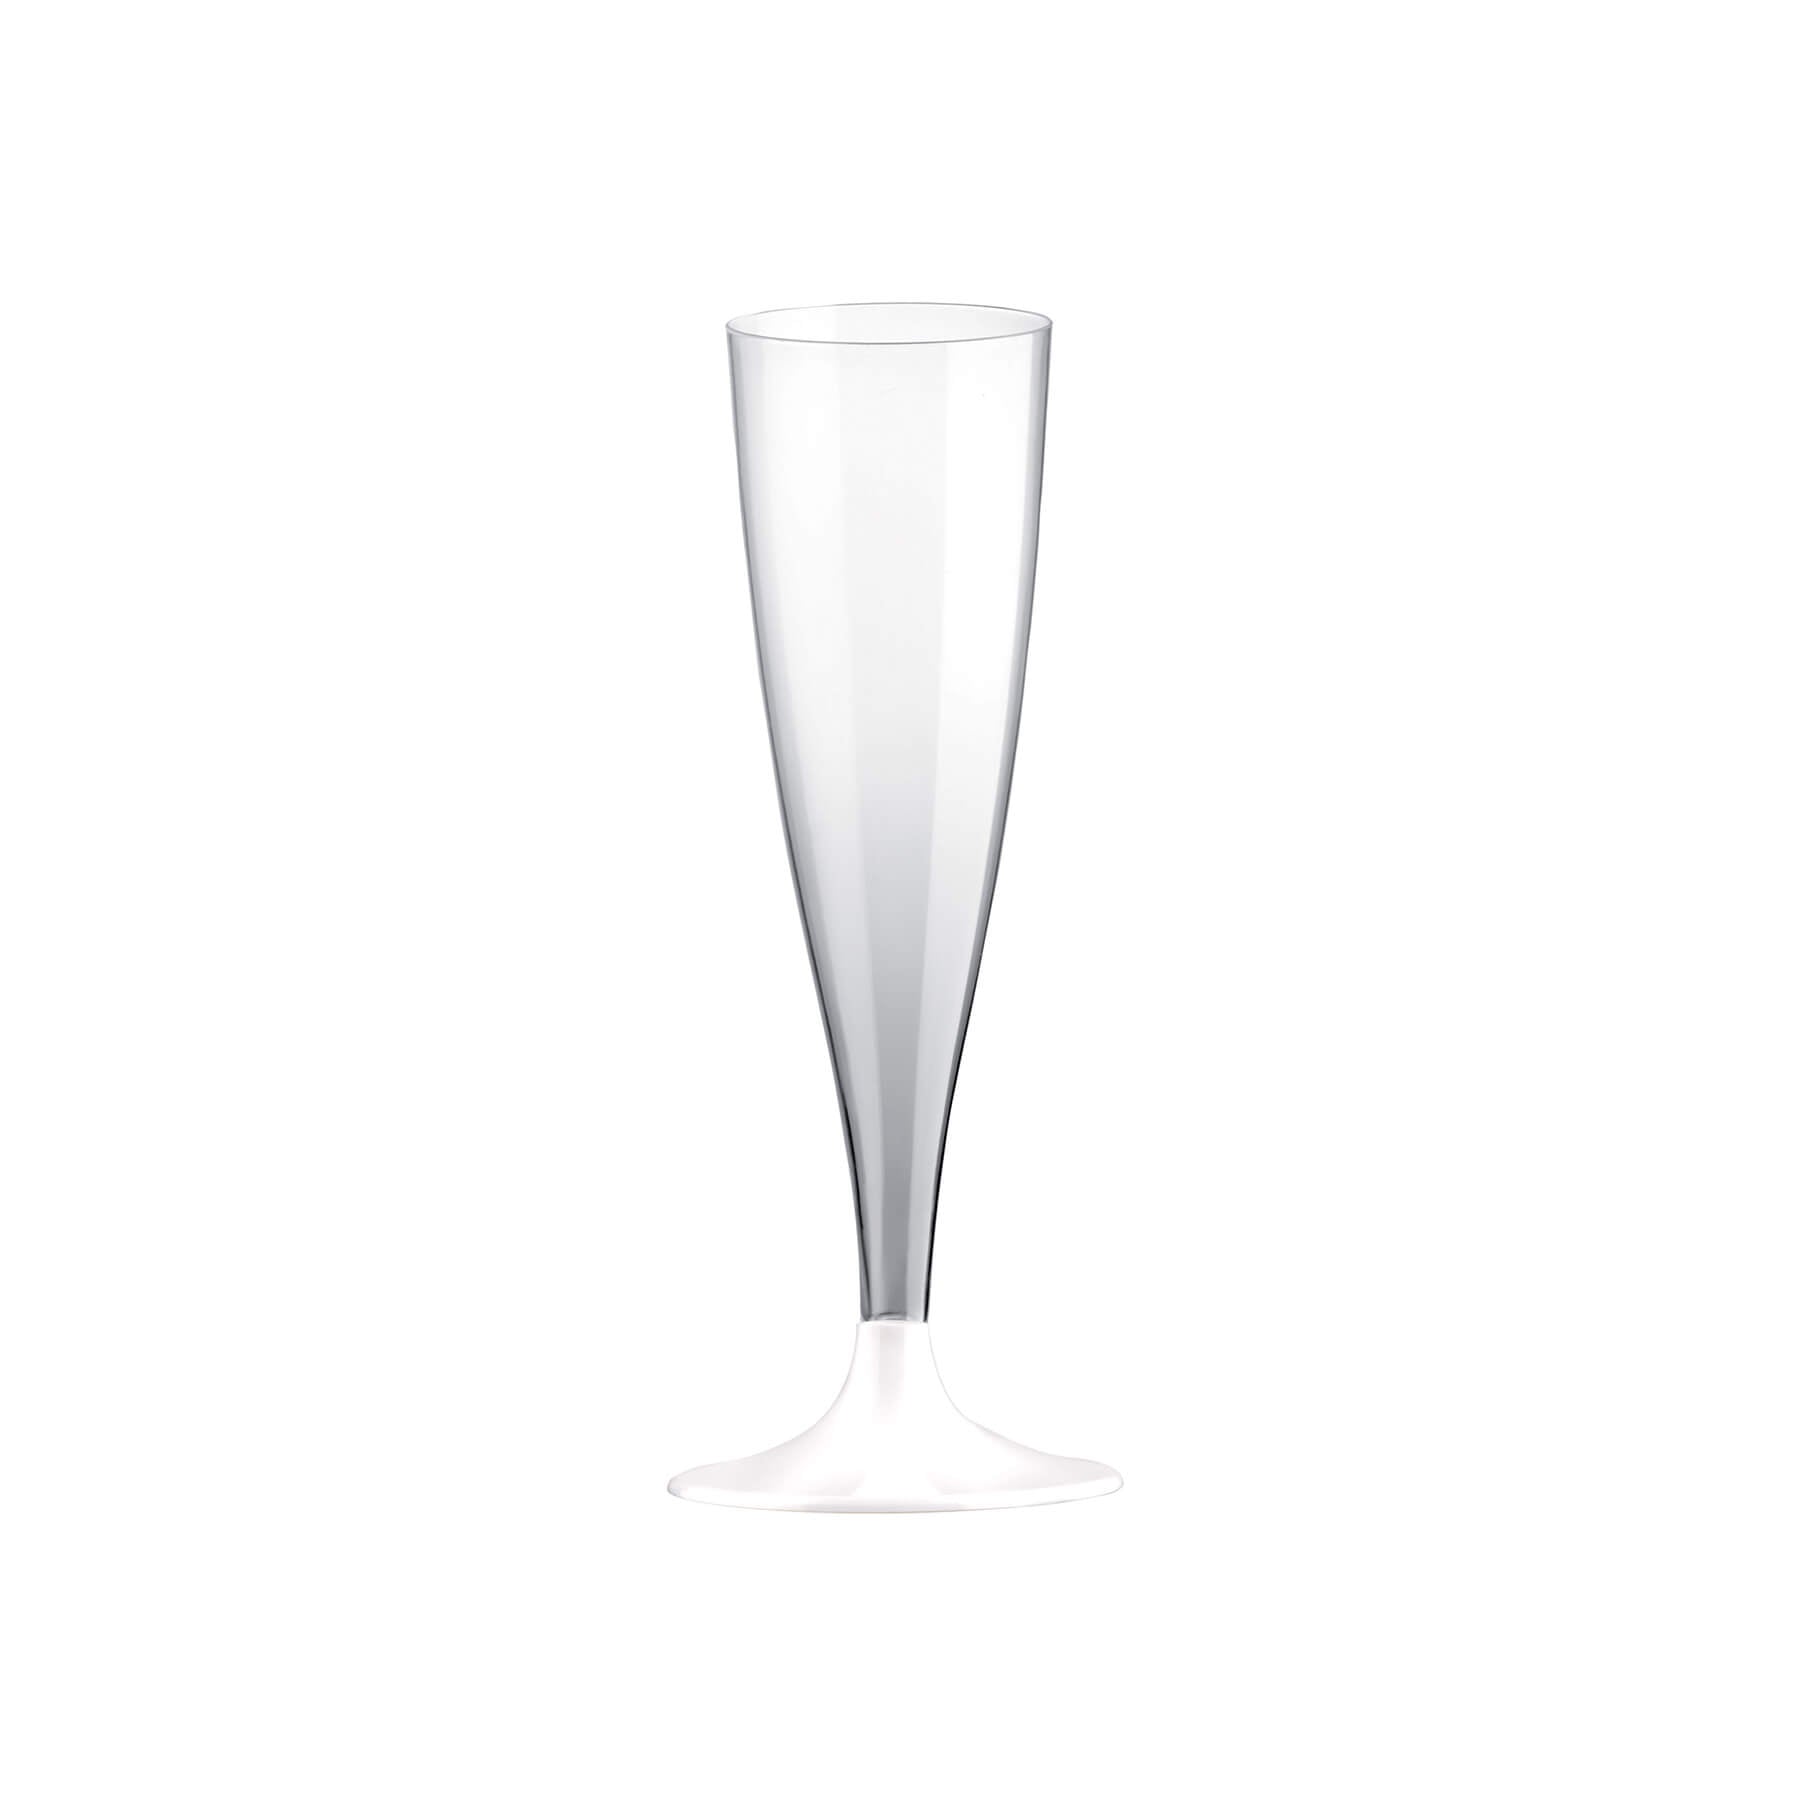 20 pz Bicchiere Flute Bianco € 0,43 Cad + Iva